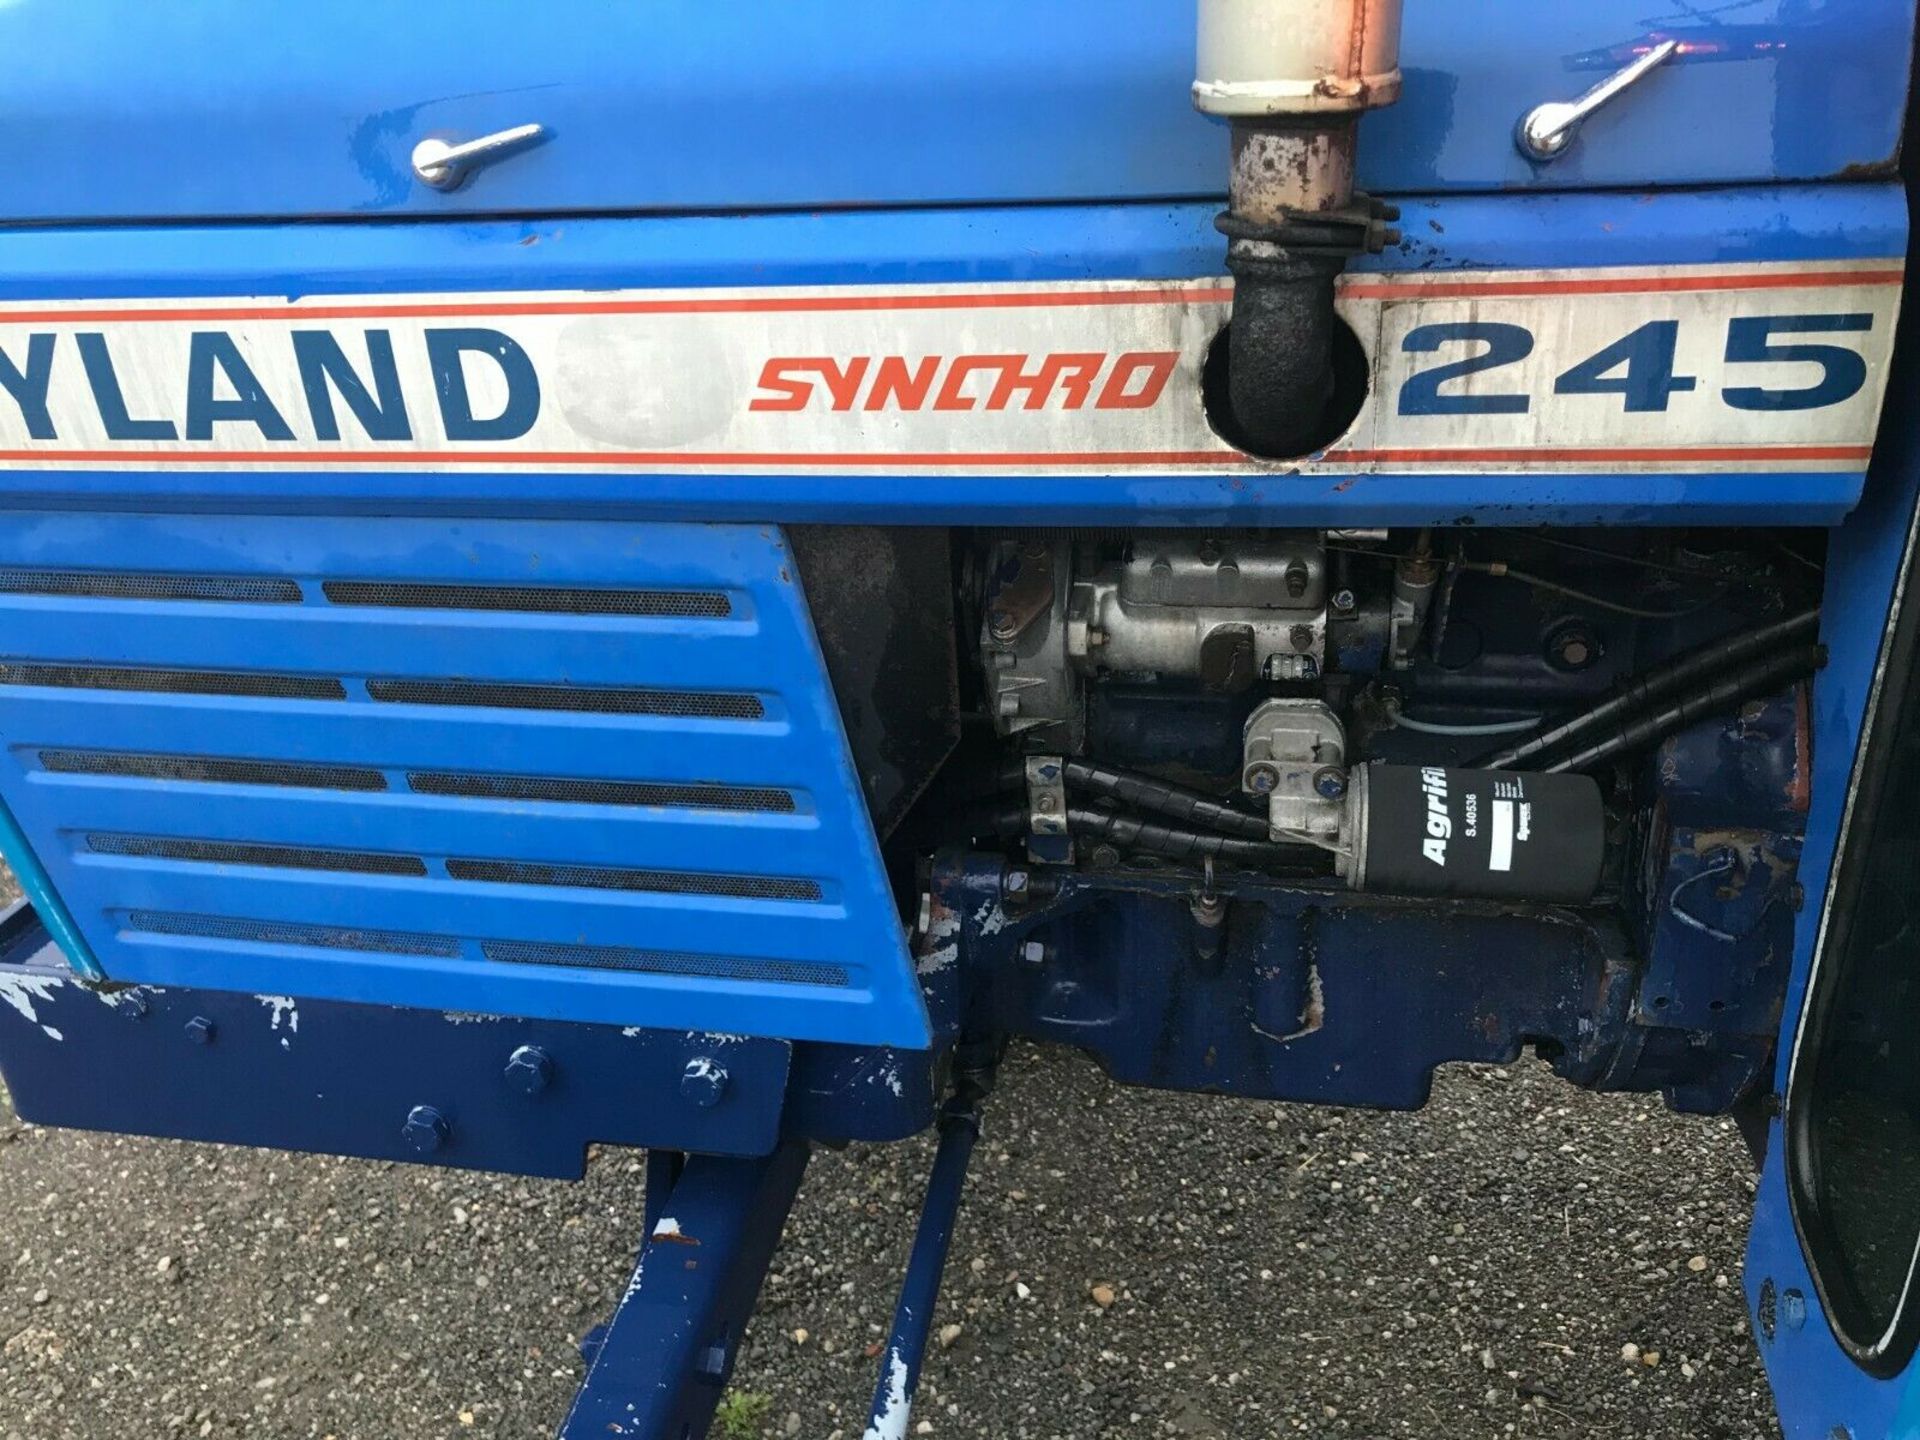 Leyland 245 Tractor - Image 9 of 12